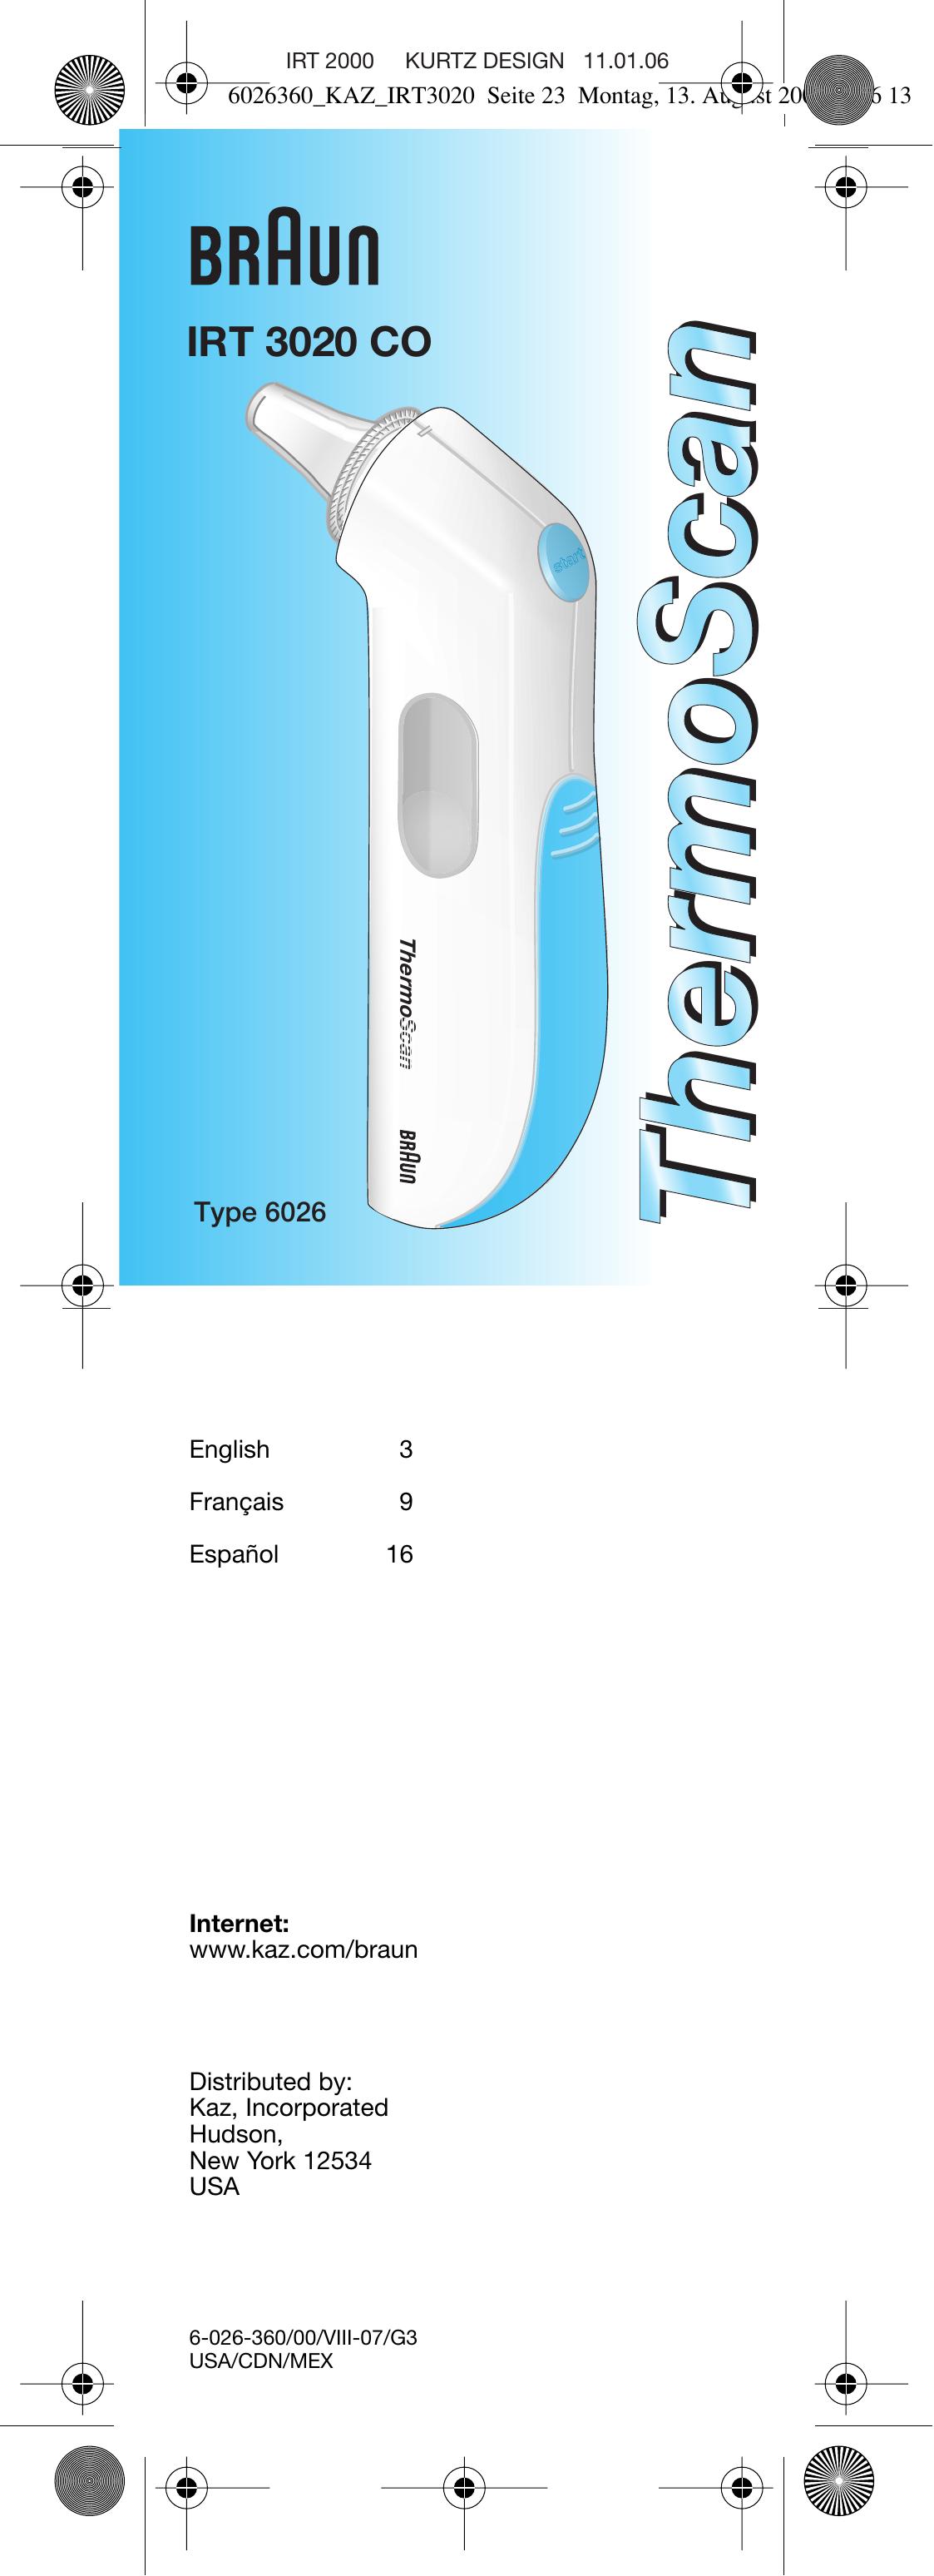 Braun IRT 3020 CO Thermometer User Manual